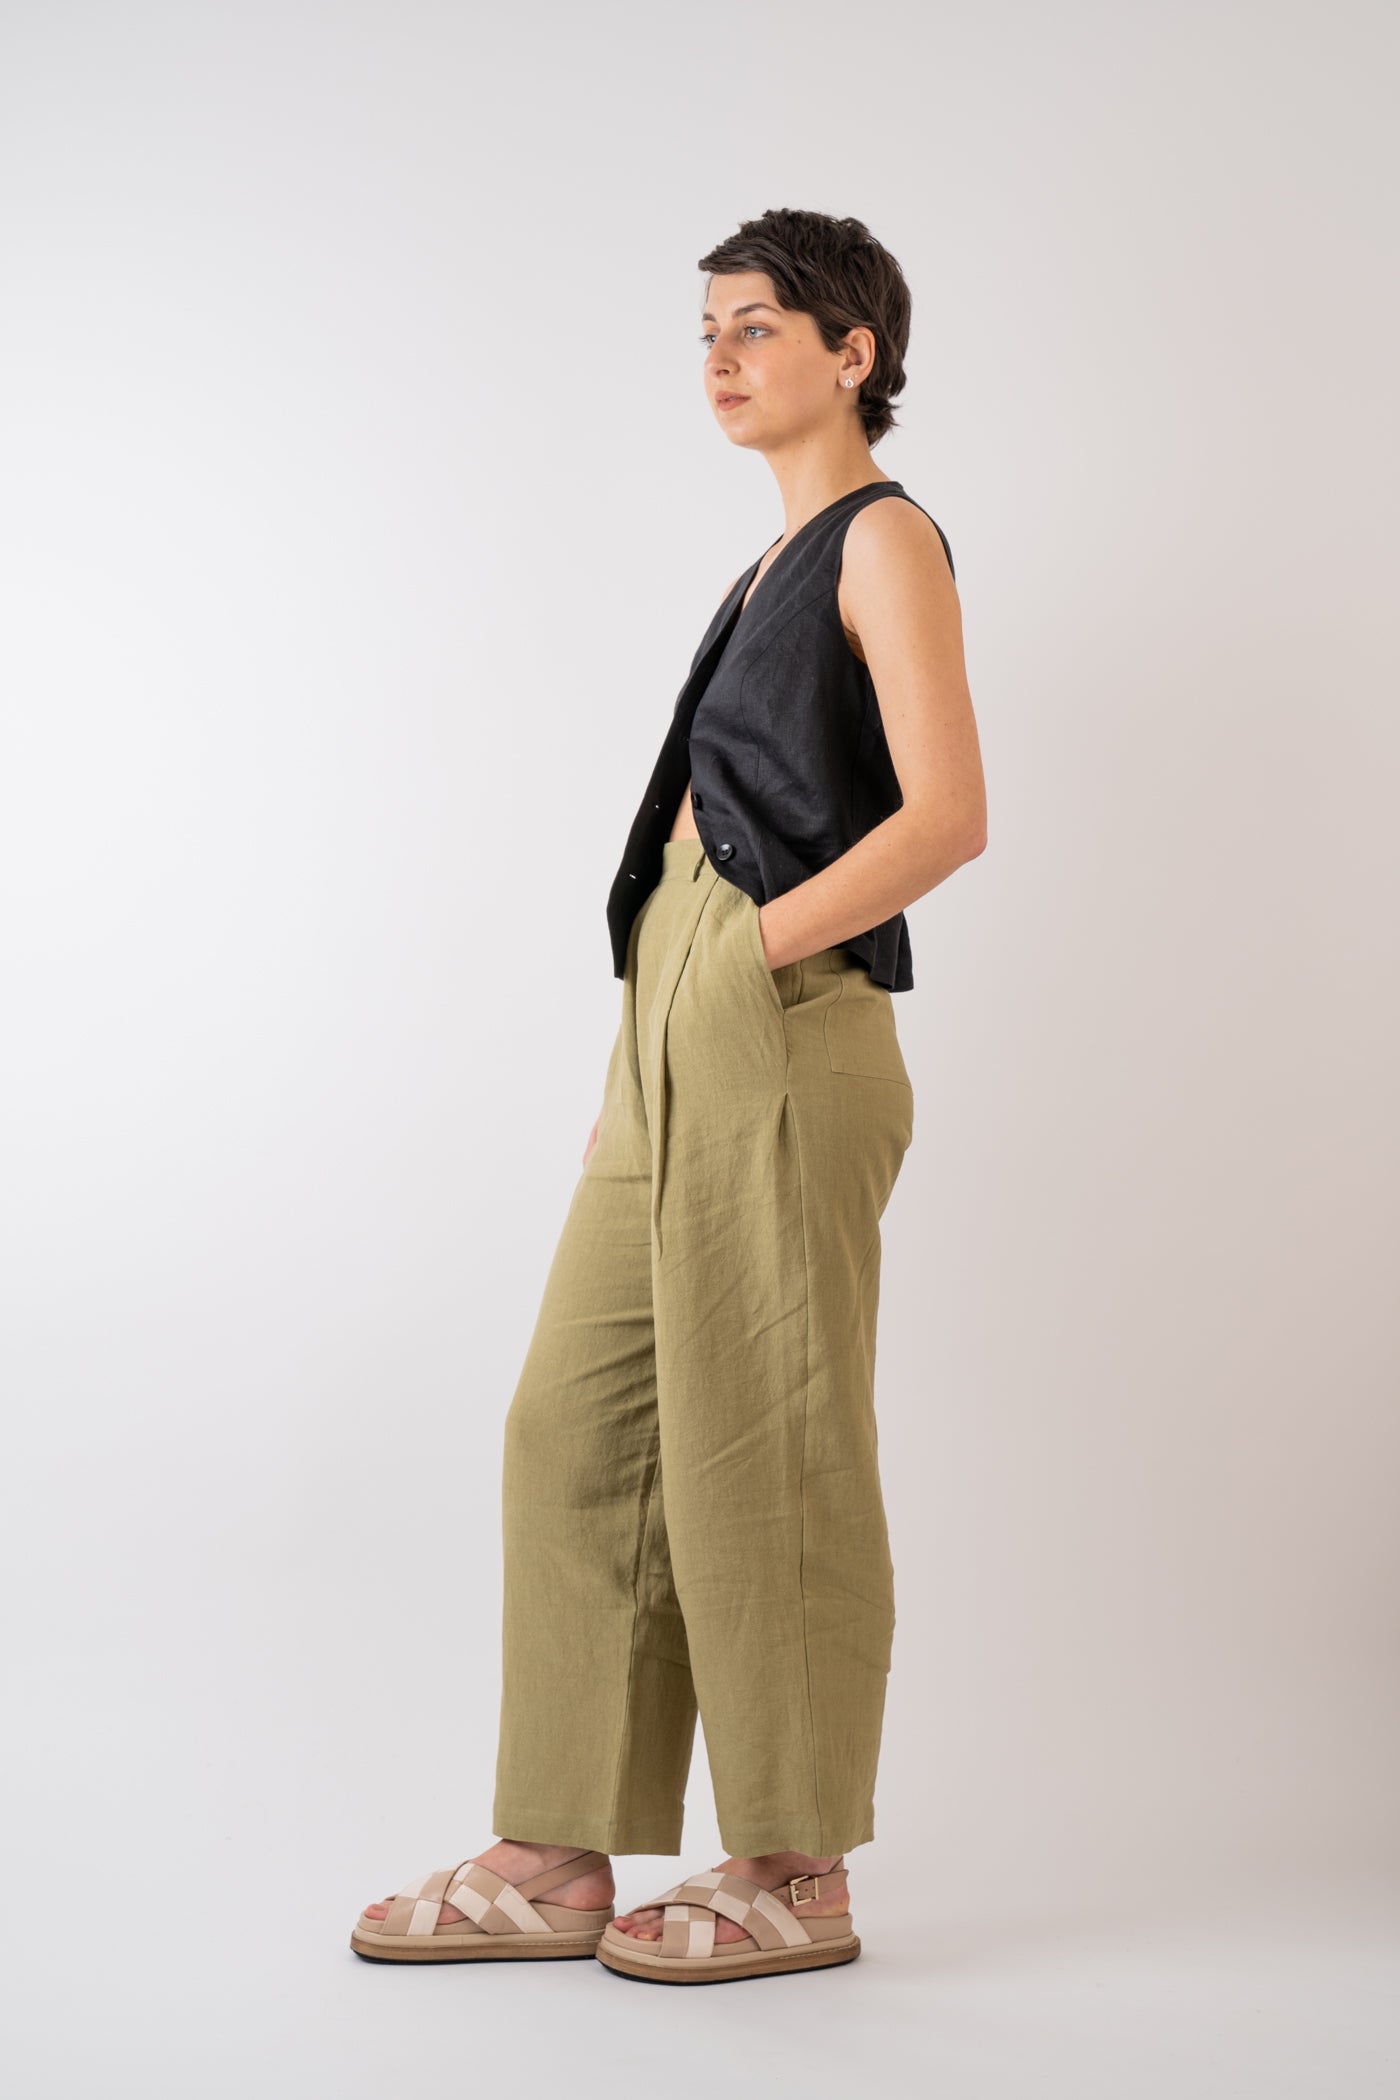 Cawley Studio 100% Linen Georgia Trouser side pocket styled with Xi Atelier Linen Avery Waistcoat in Black